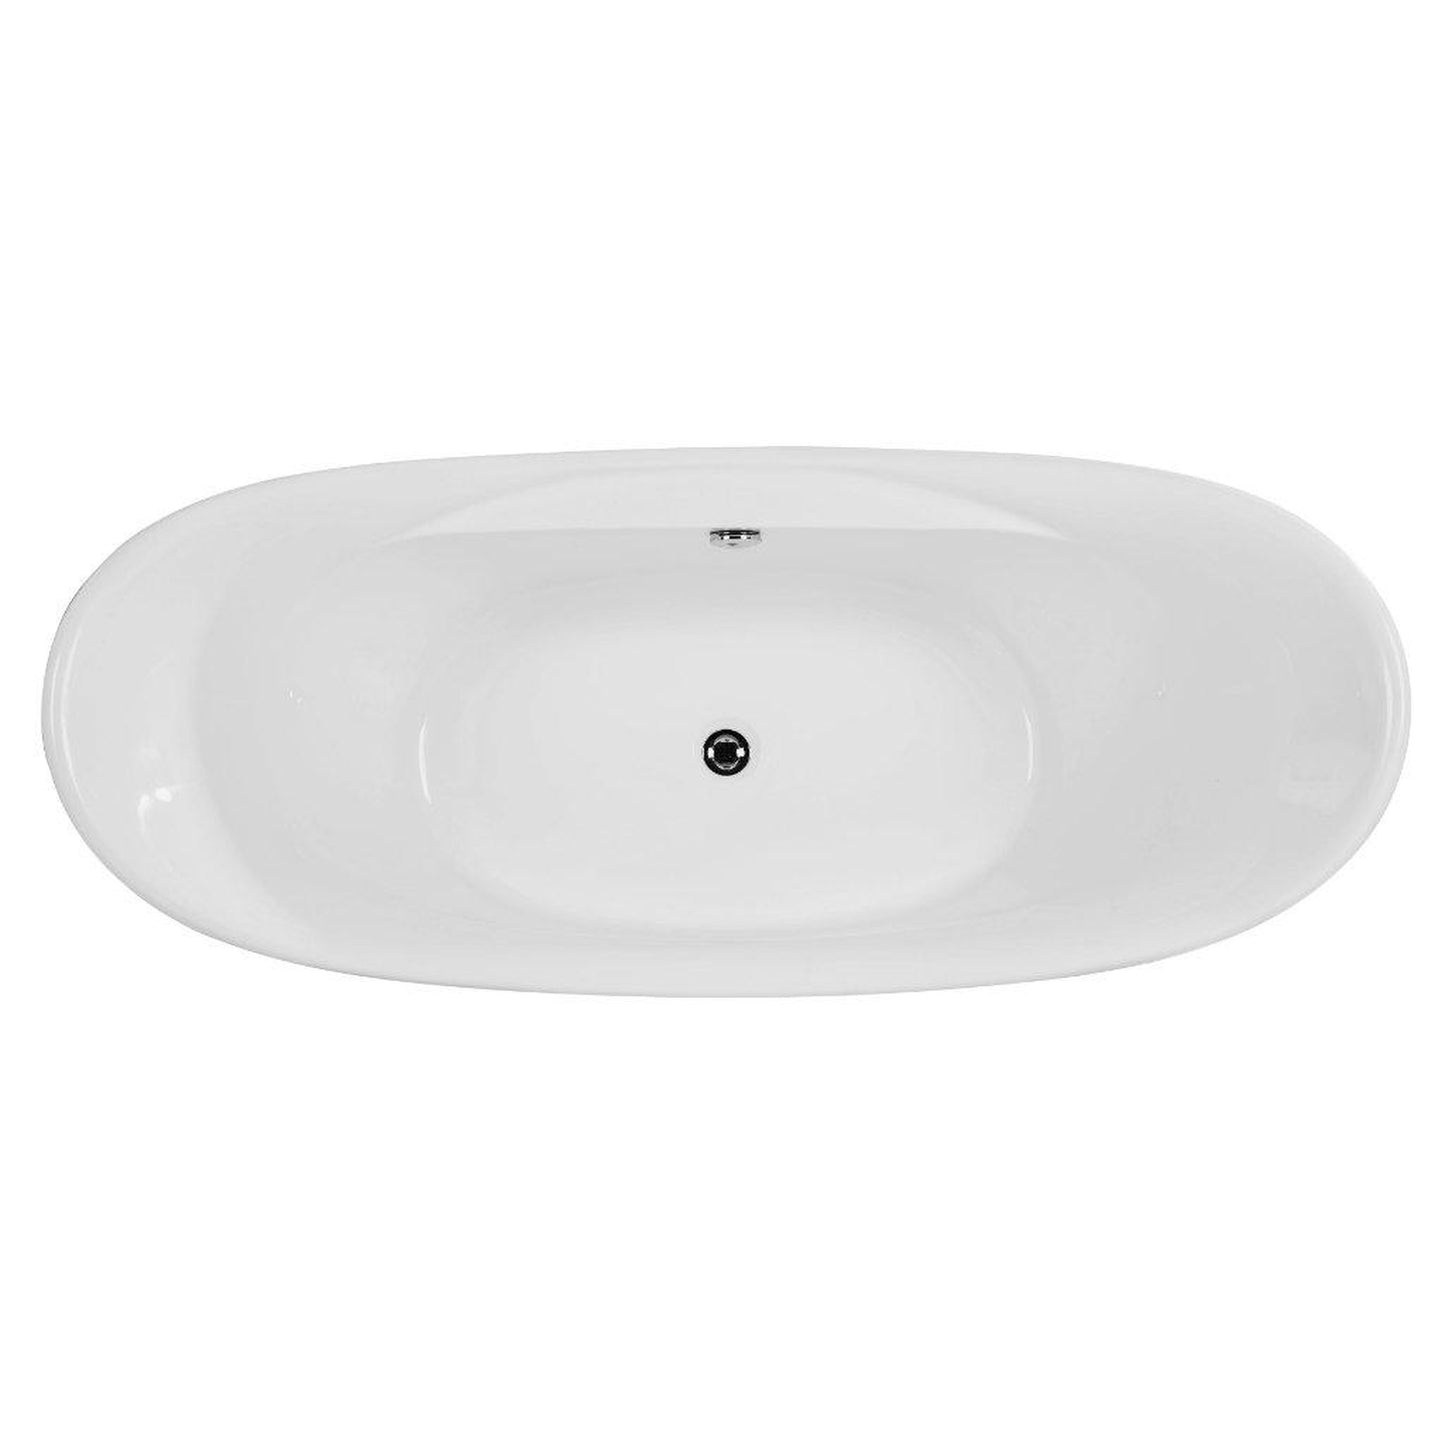 ALFI Brand AB8803 68" One Person Freestanding White Oval Acrylic Soaking Bathtub